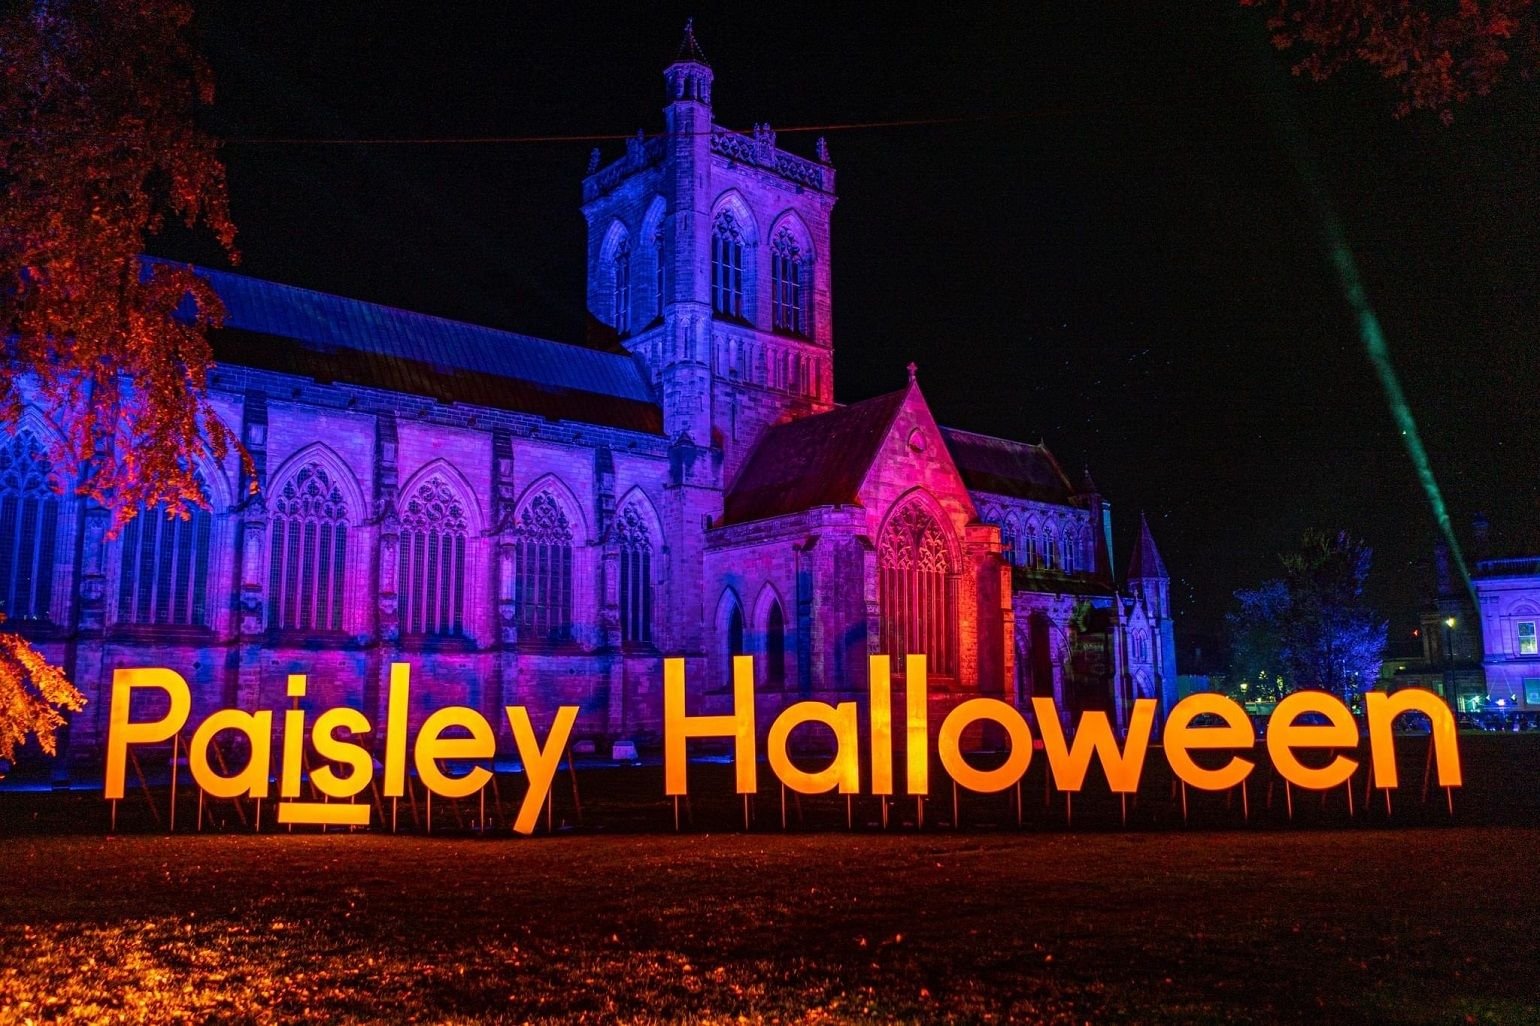 paisley-halloween-sign-1540x1026-1.jpg